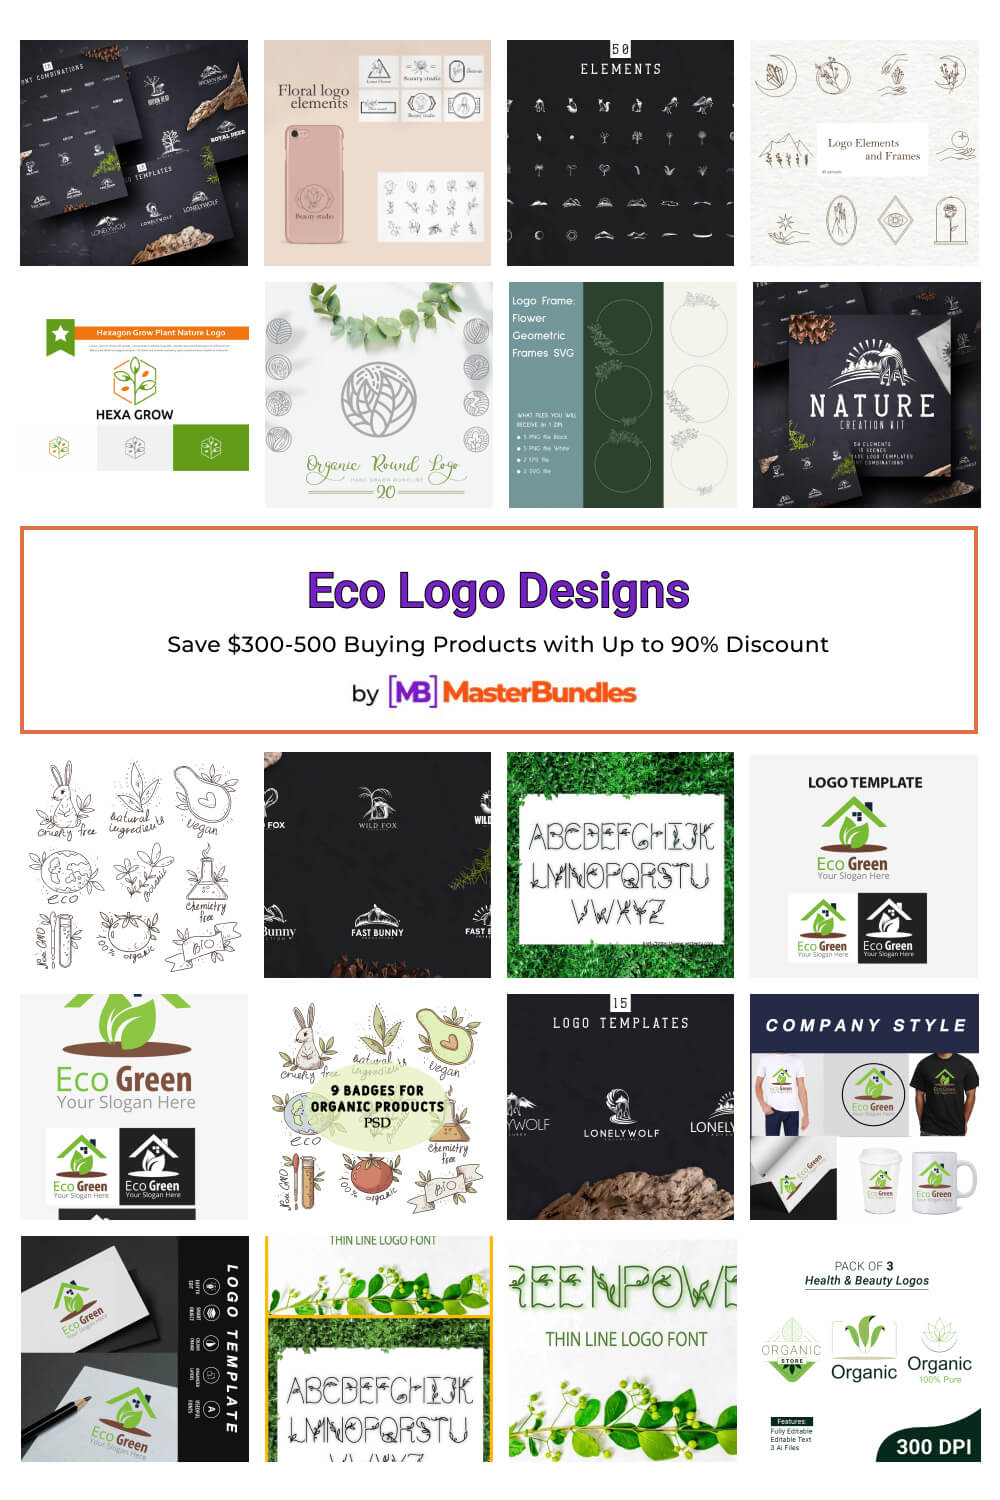 eco logo designs pinterest image.